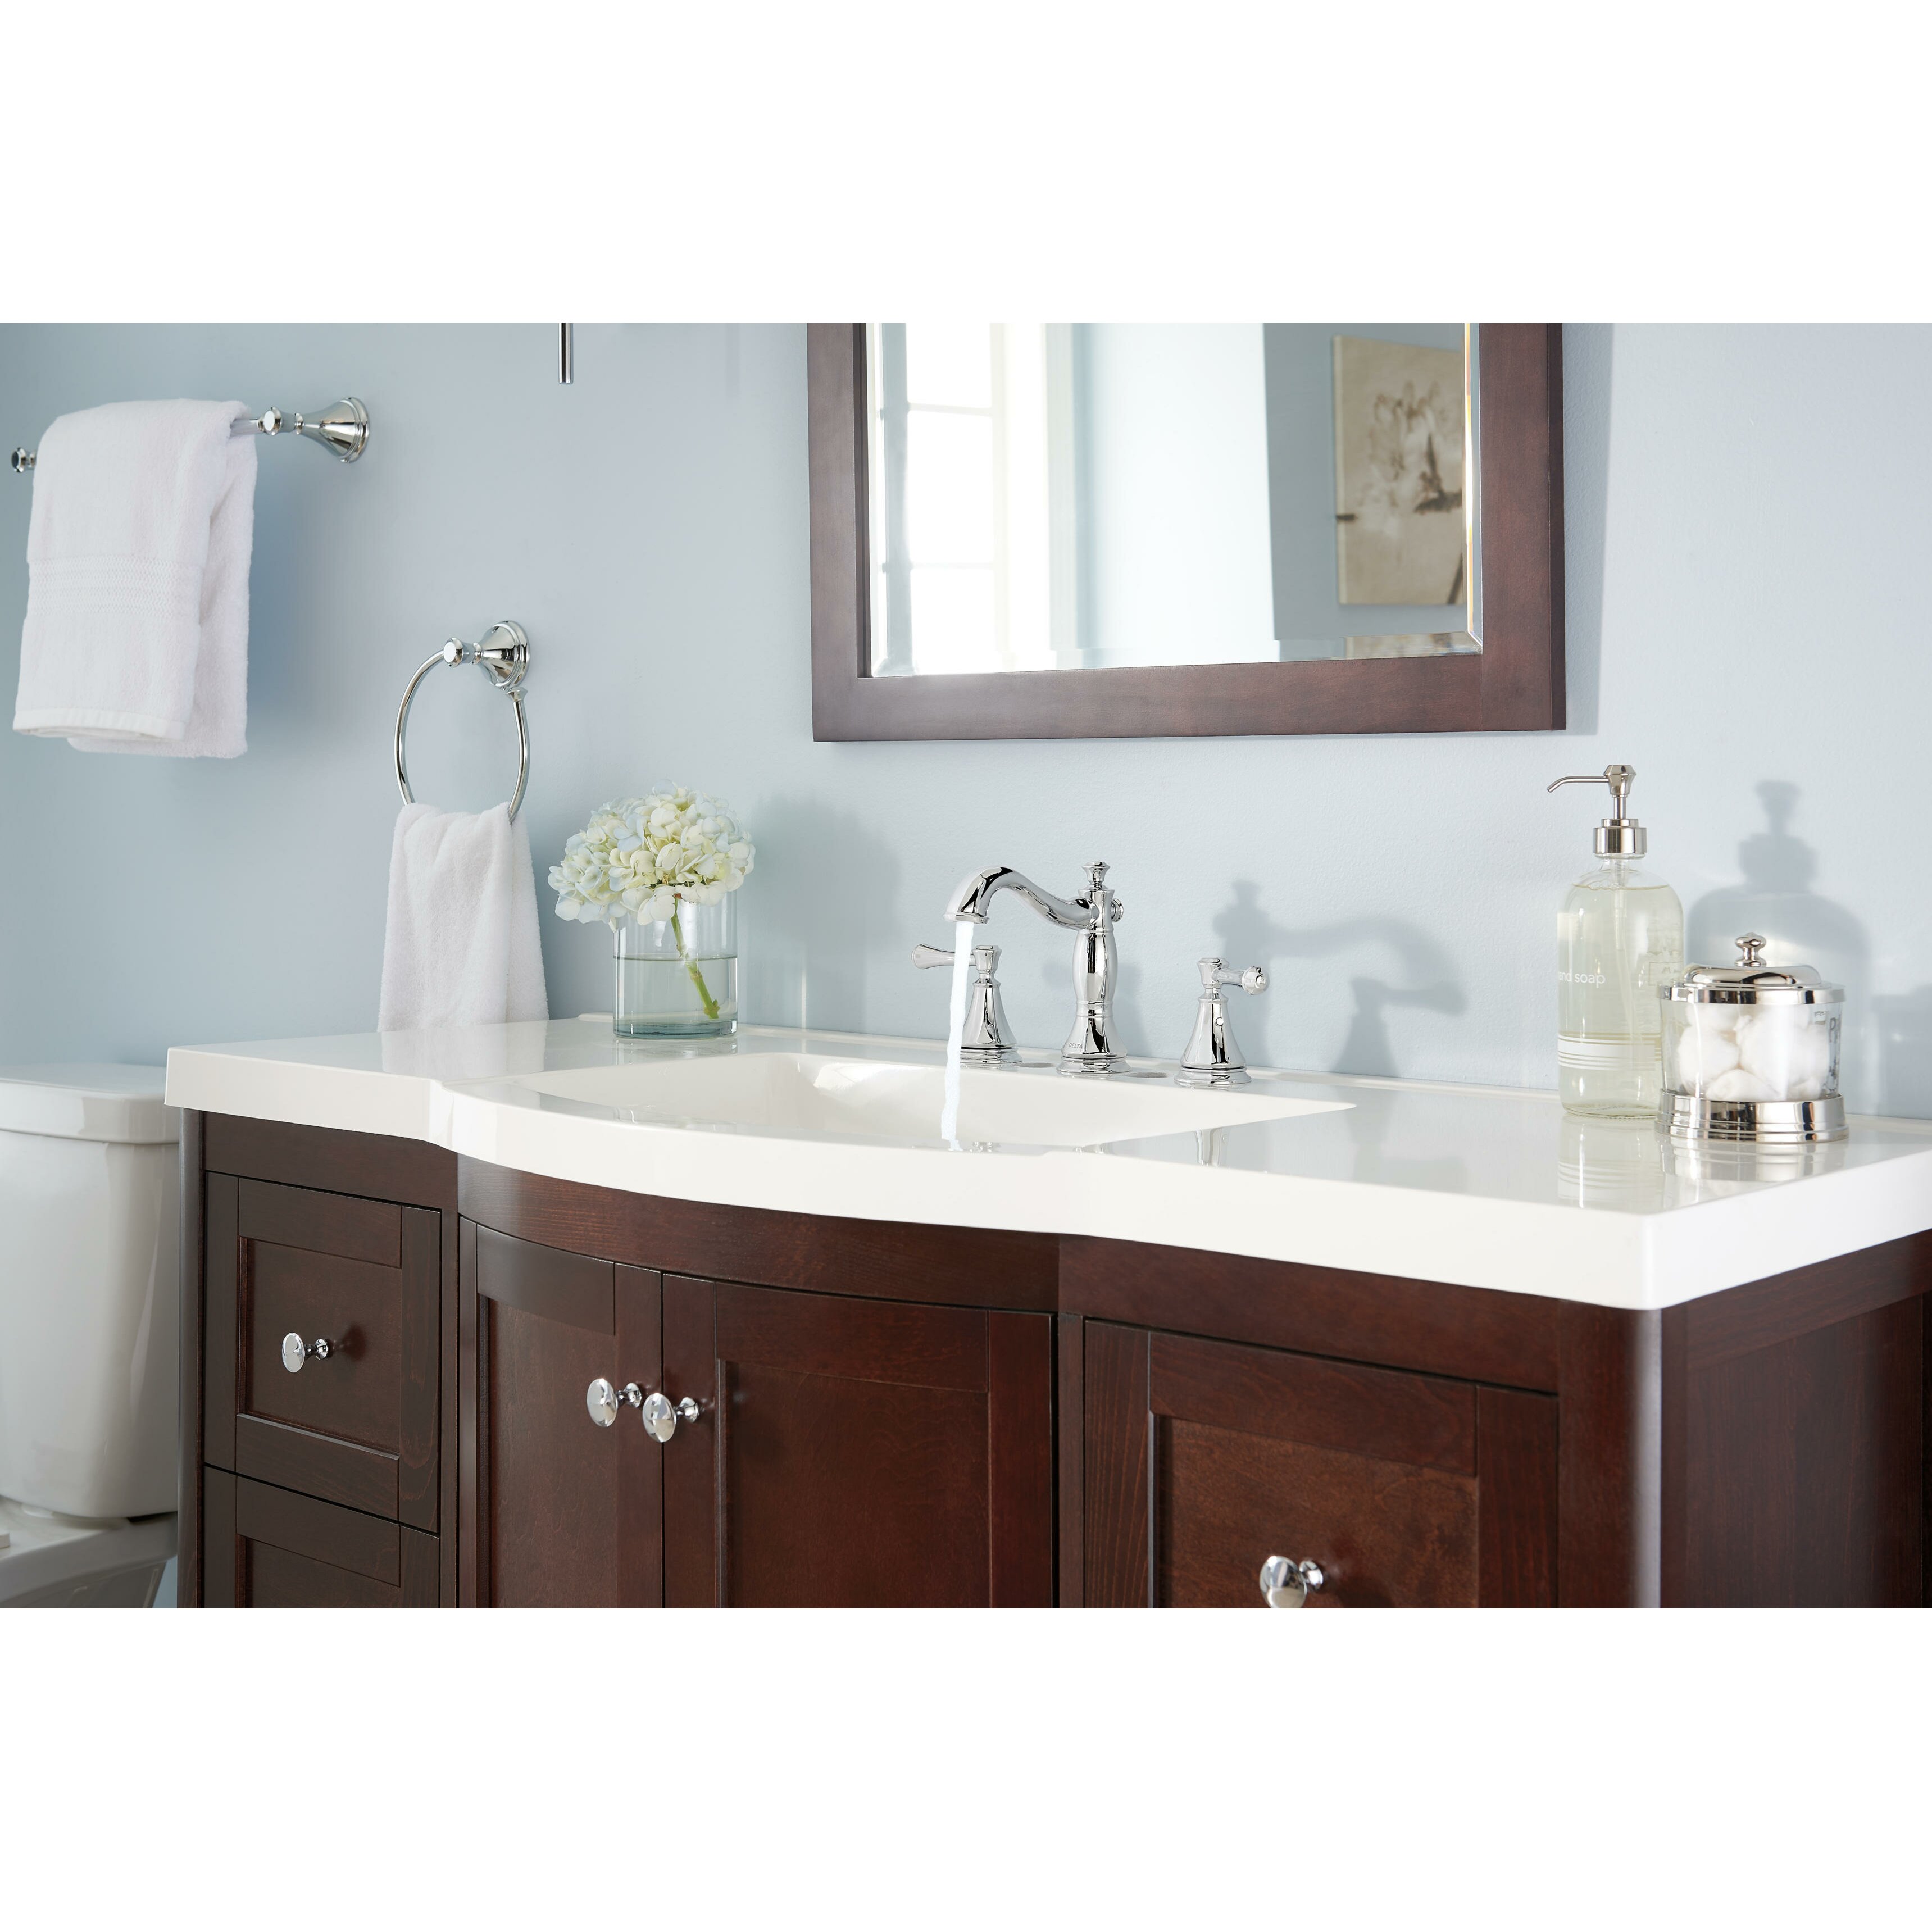 Delta Cassidy™ Standard Bathroom Faucet Double Handle ...